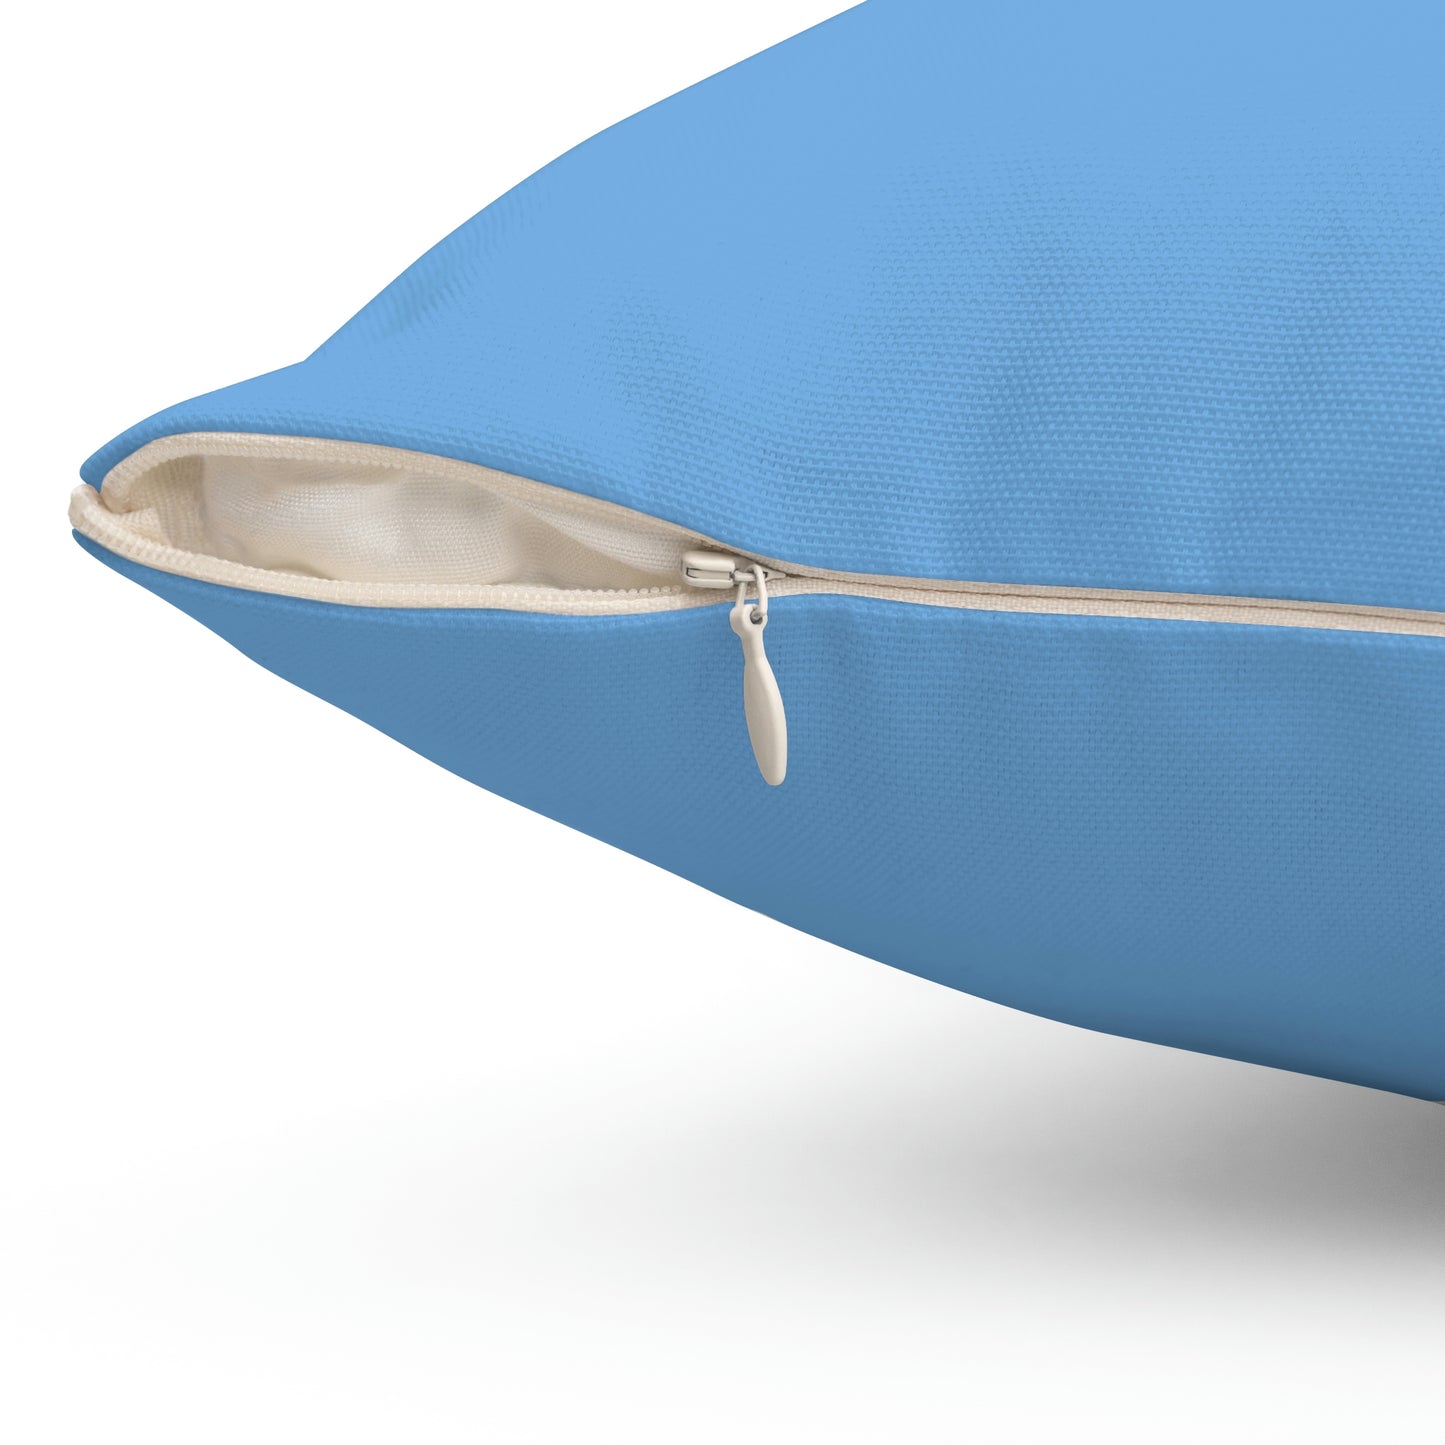 Spun Polyester Square Pillow Case “Moth White on Light Blue”